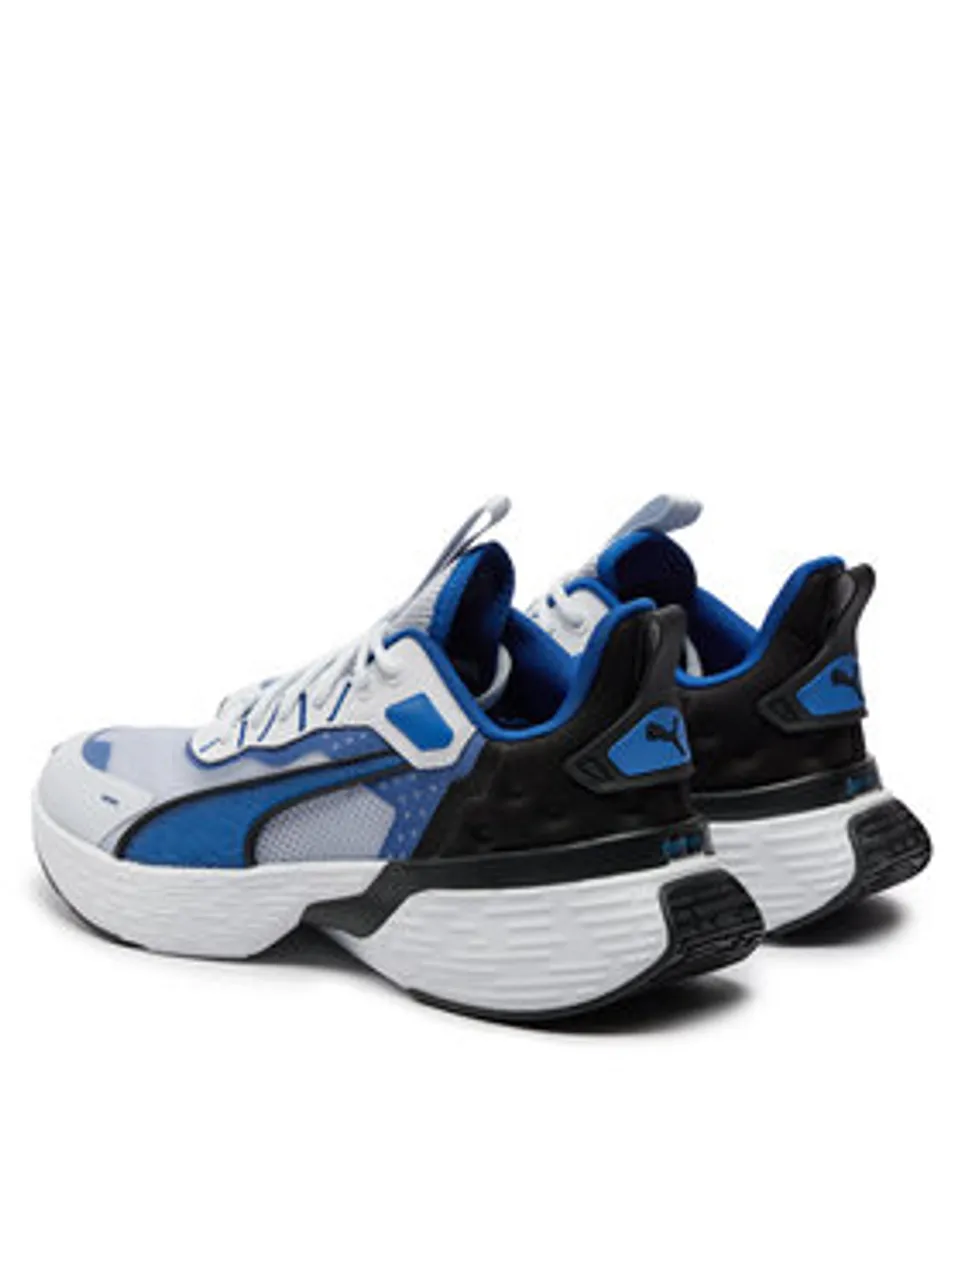 Puma Sneakers Softride Sway Running Shoes 379443 02 Blau